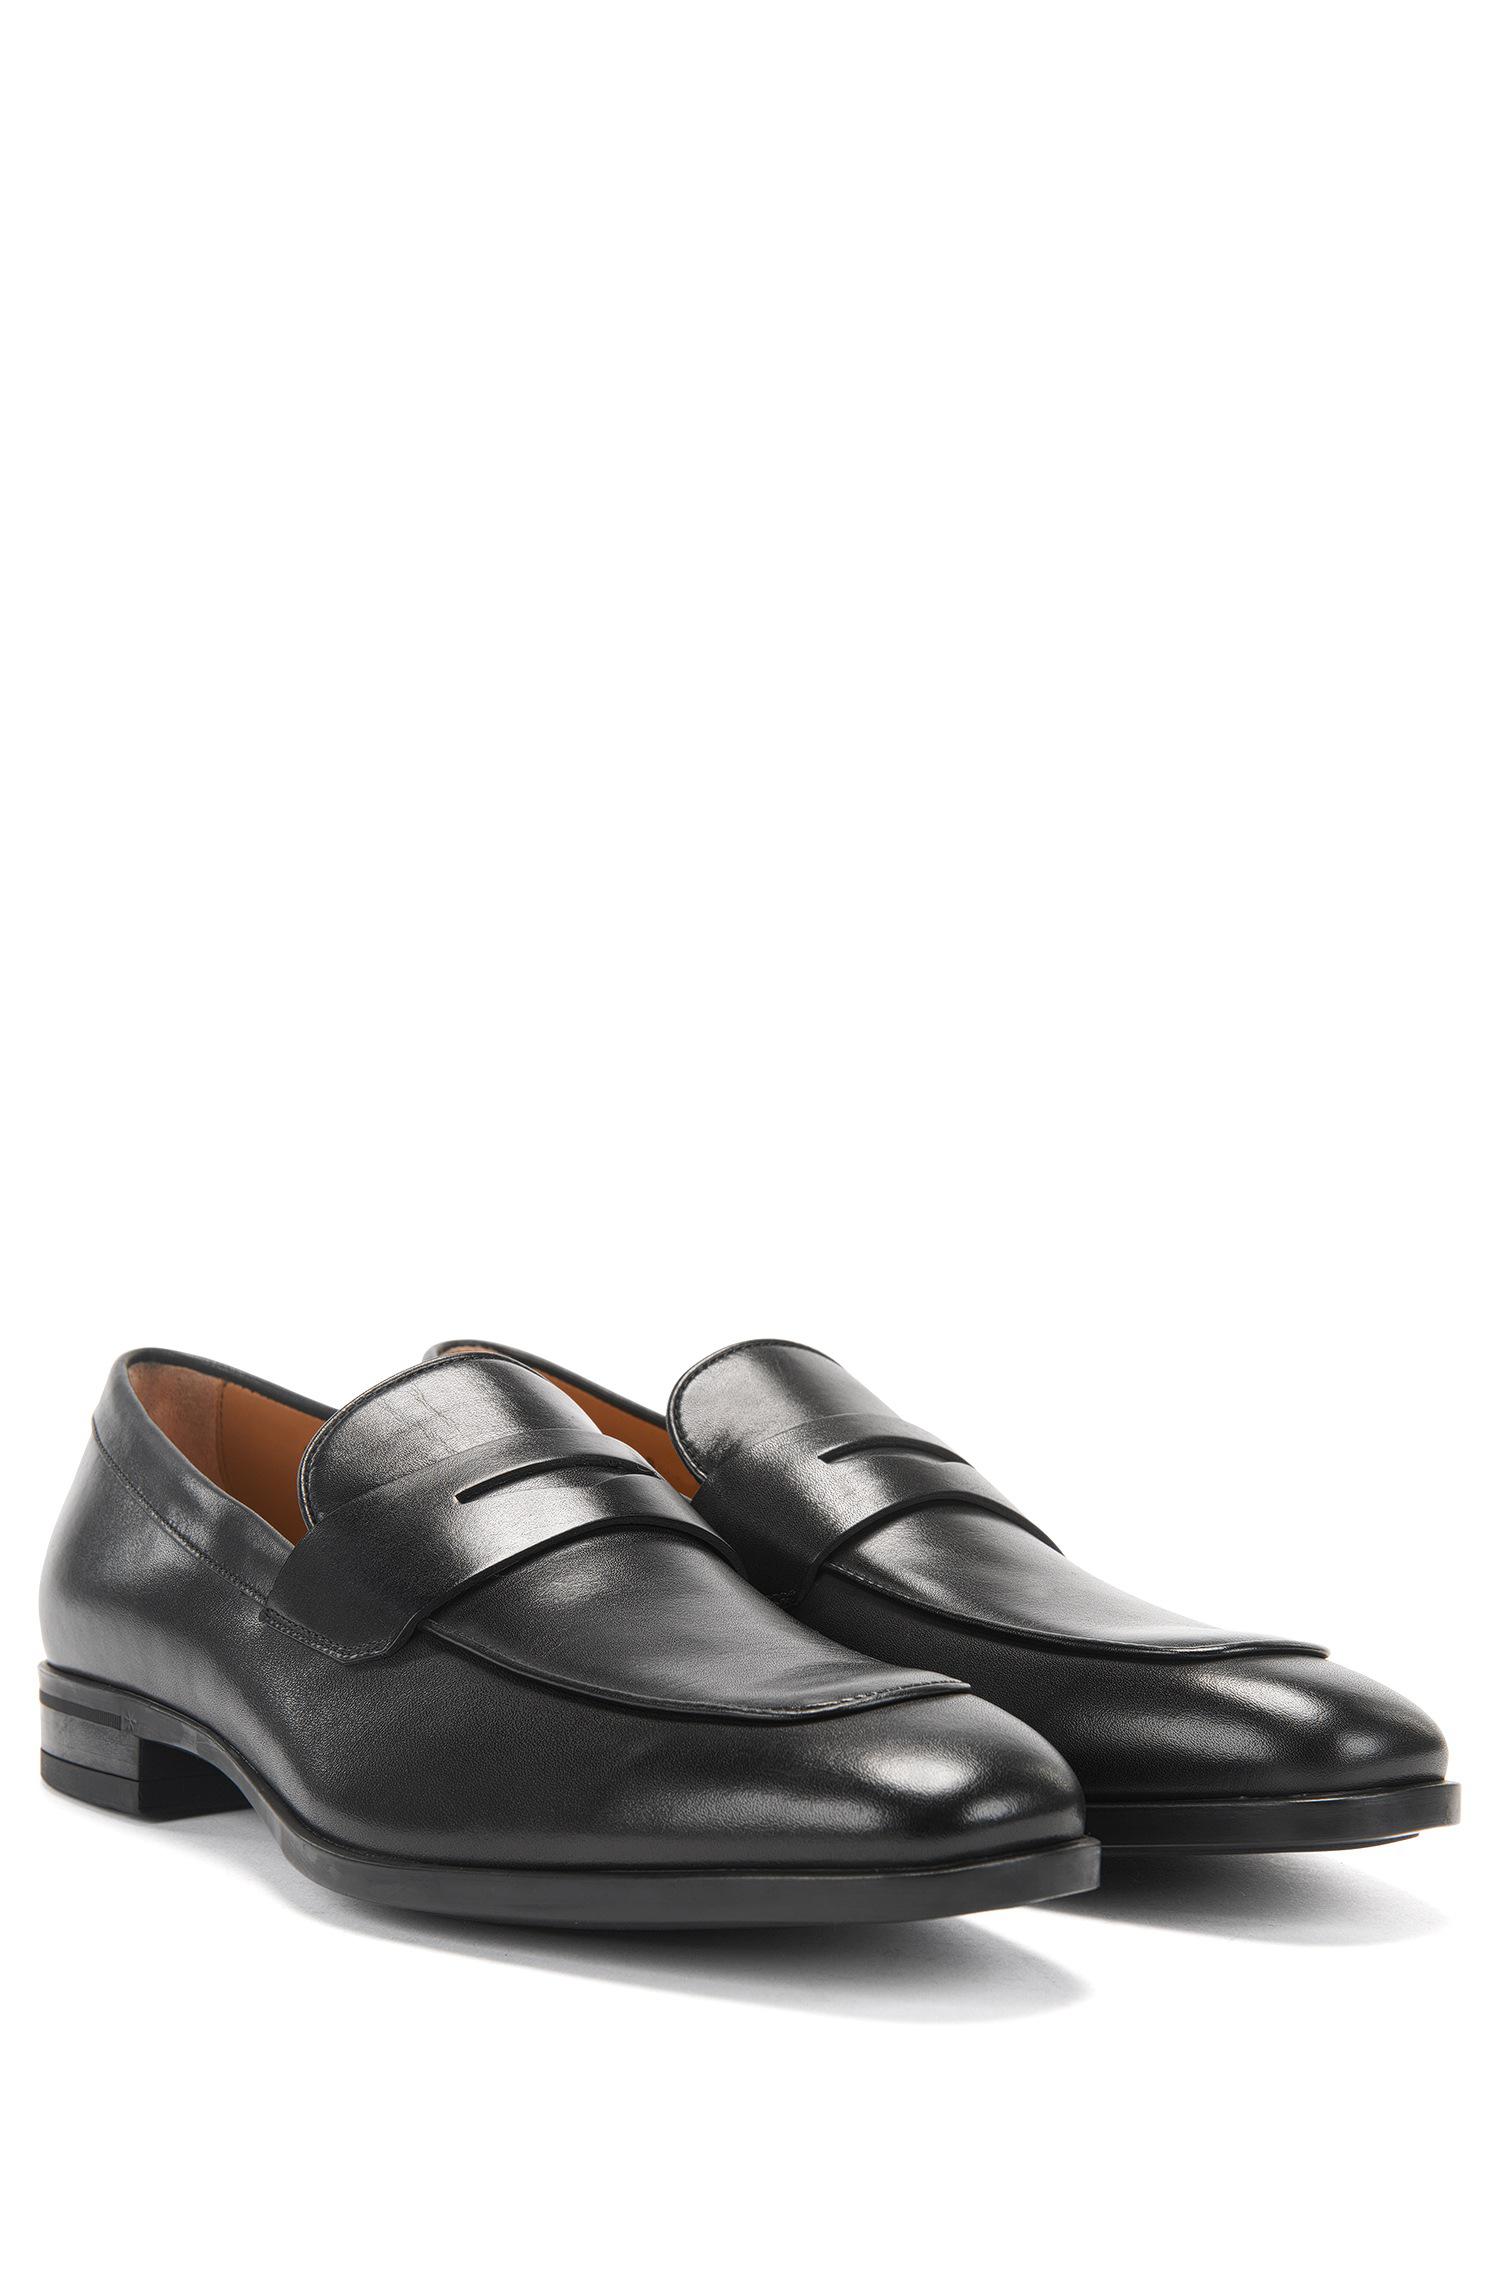 BOSS Kensington Leather Penny Loafers in Black for Men - Lyst